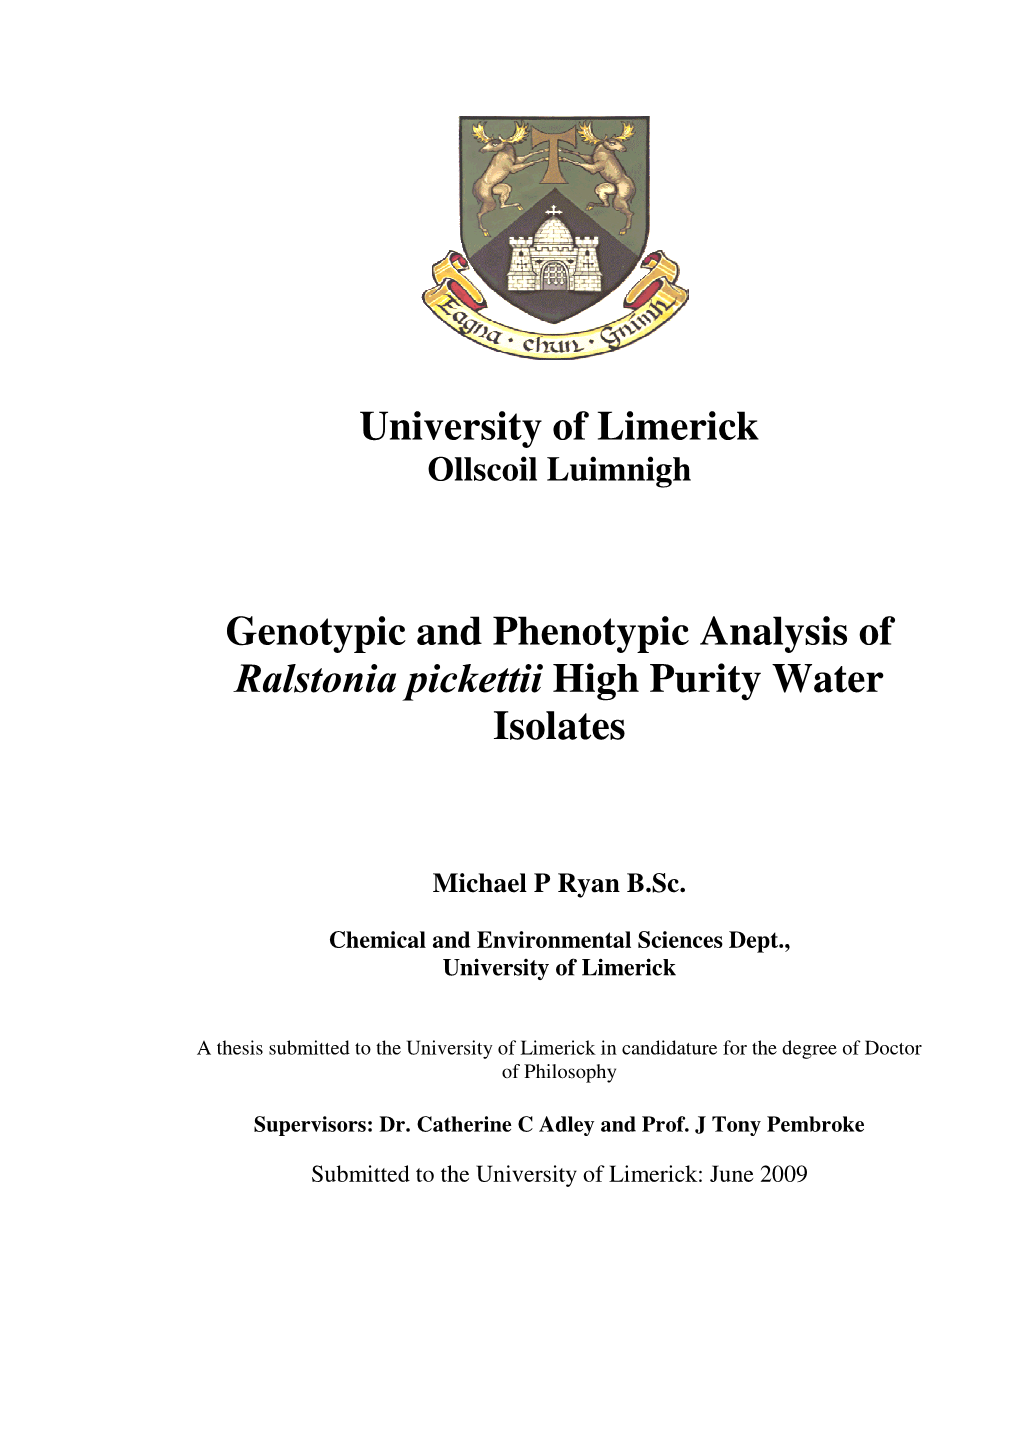 University of Limerick Genotypic and Phenotypic Analysis of Ralstonia